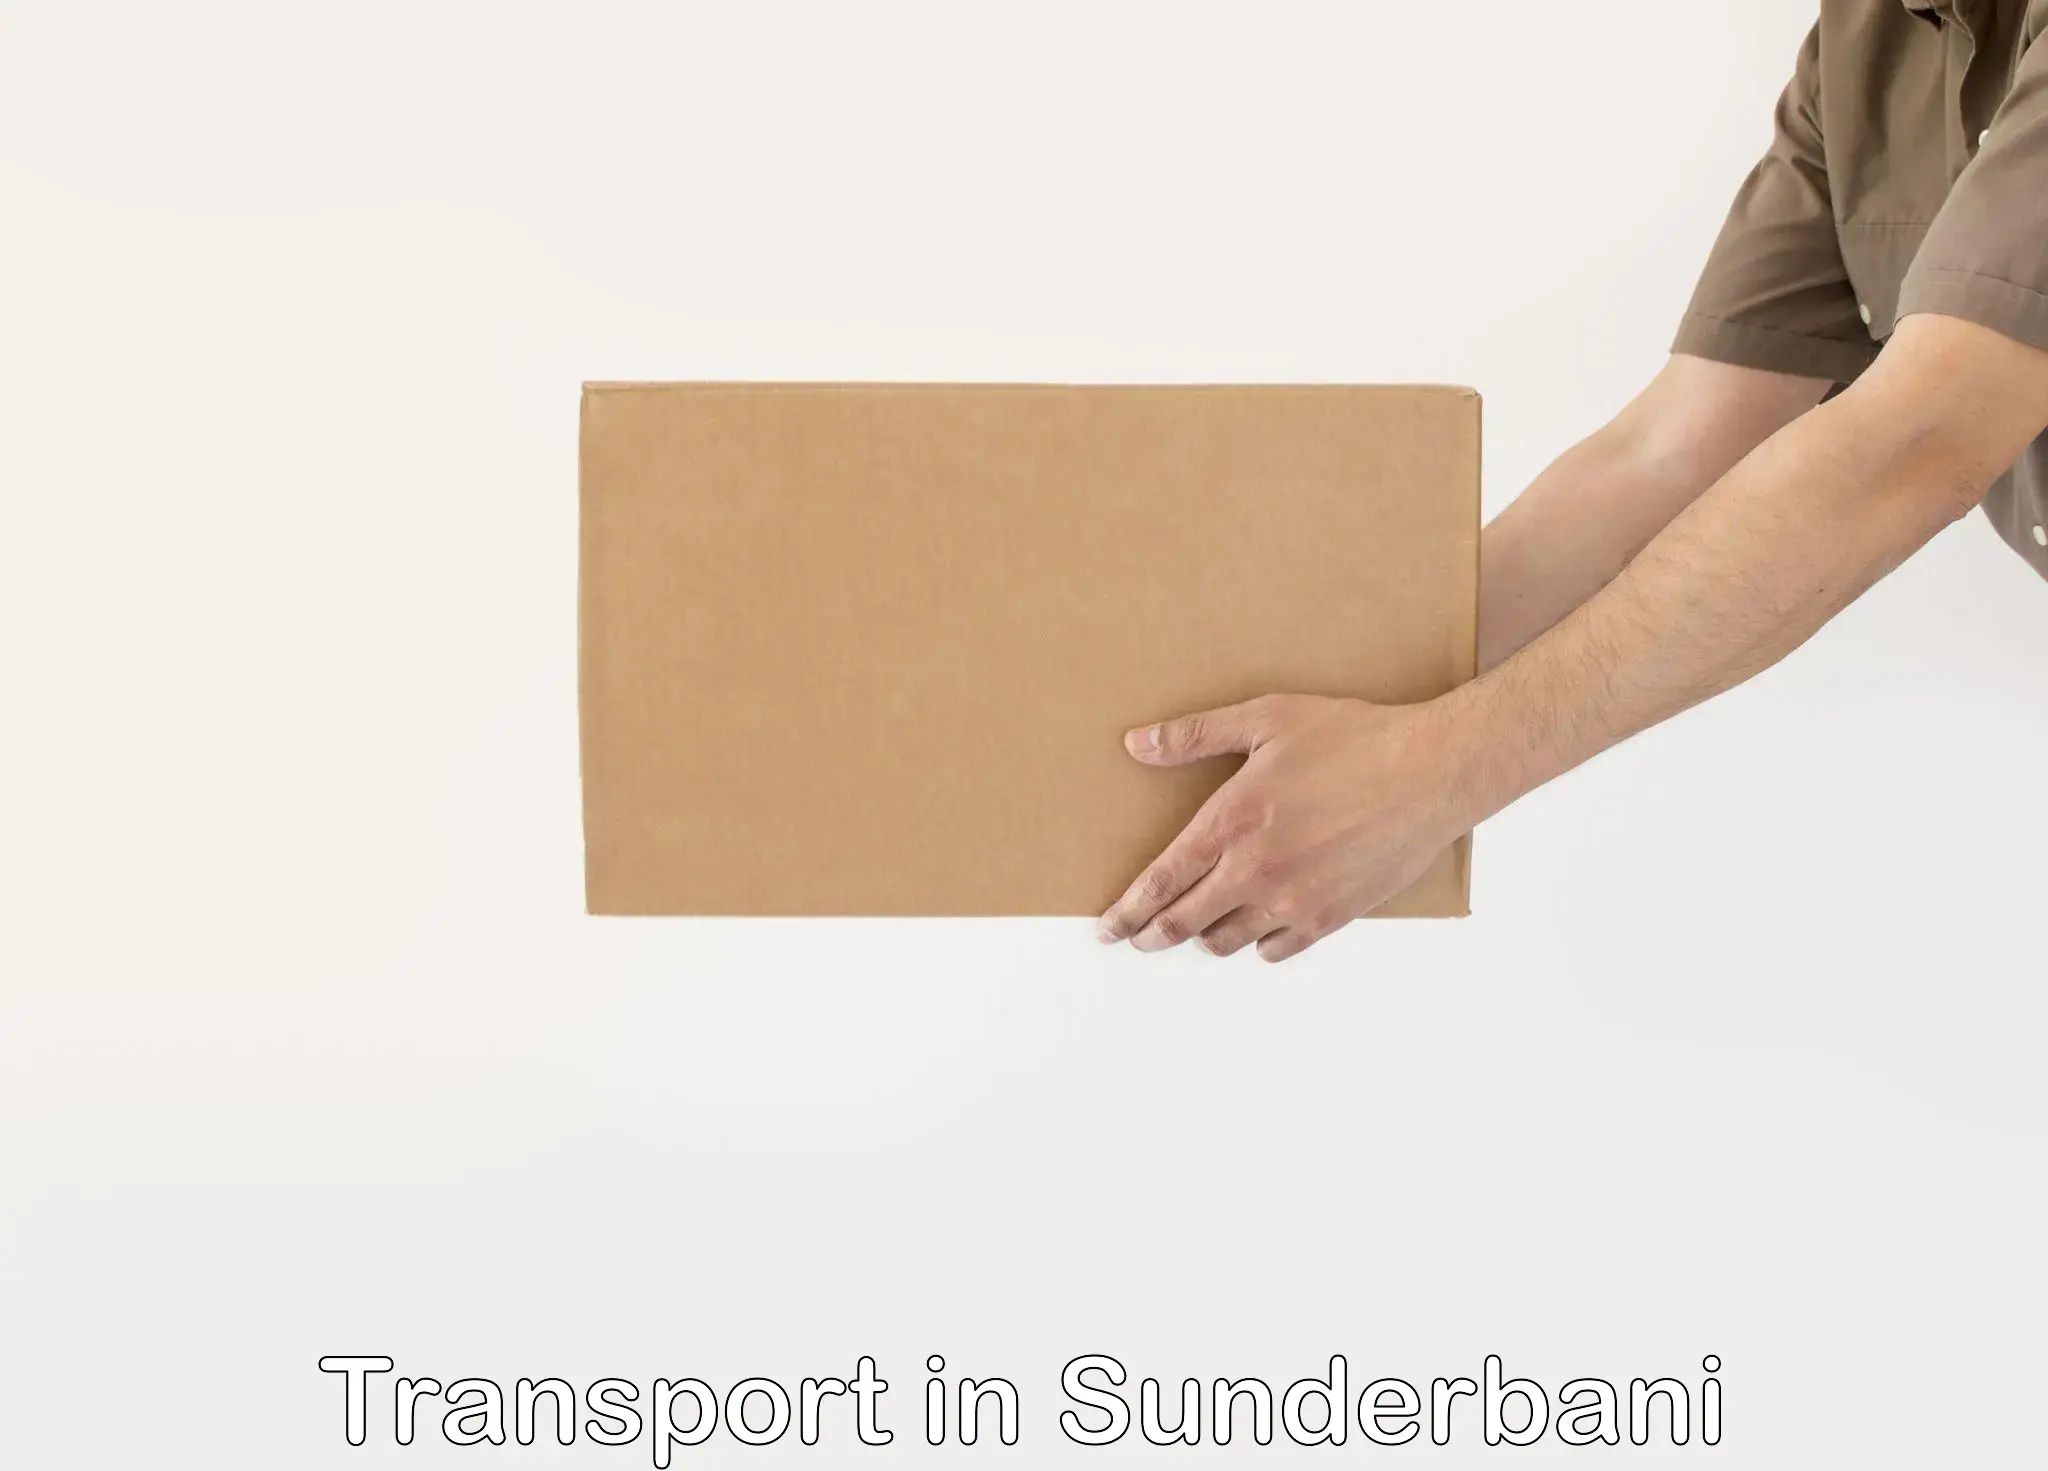 Cargo transportation services in Sunderbani